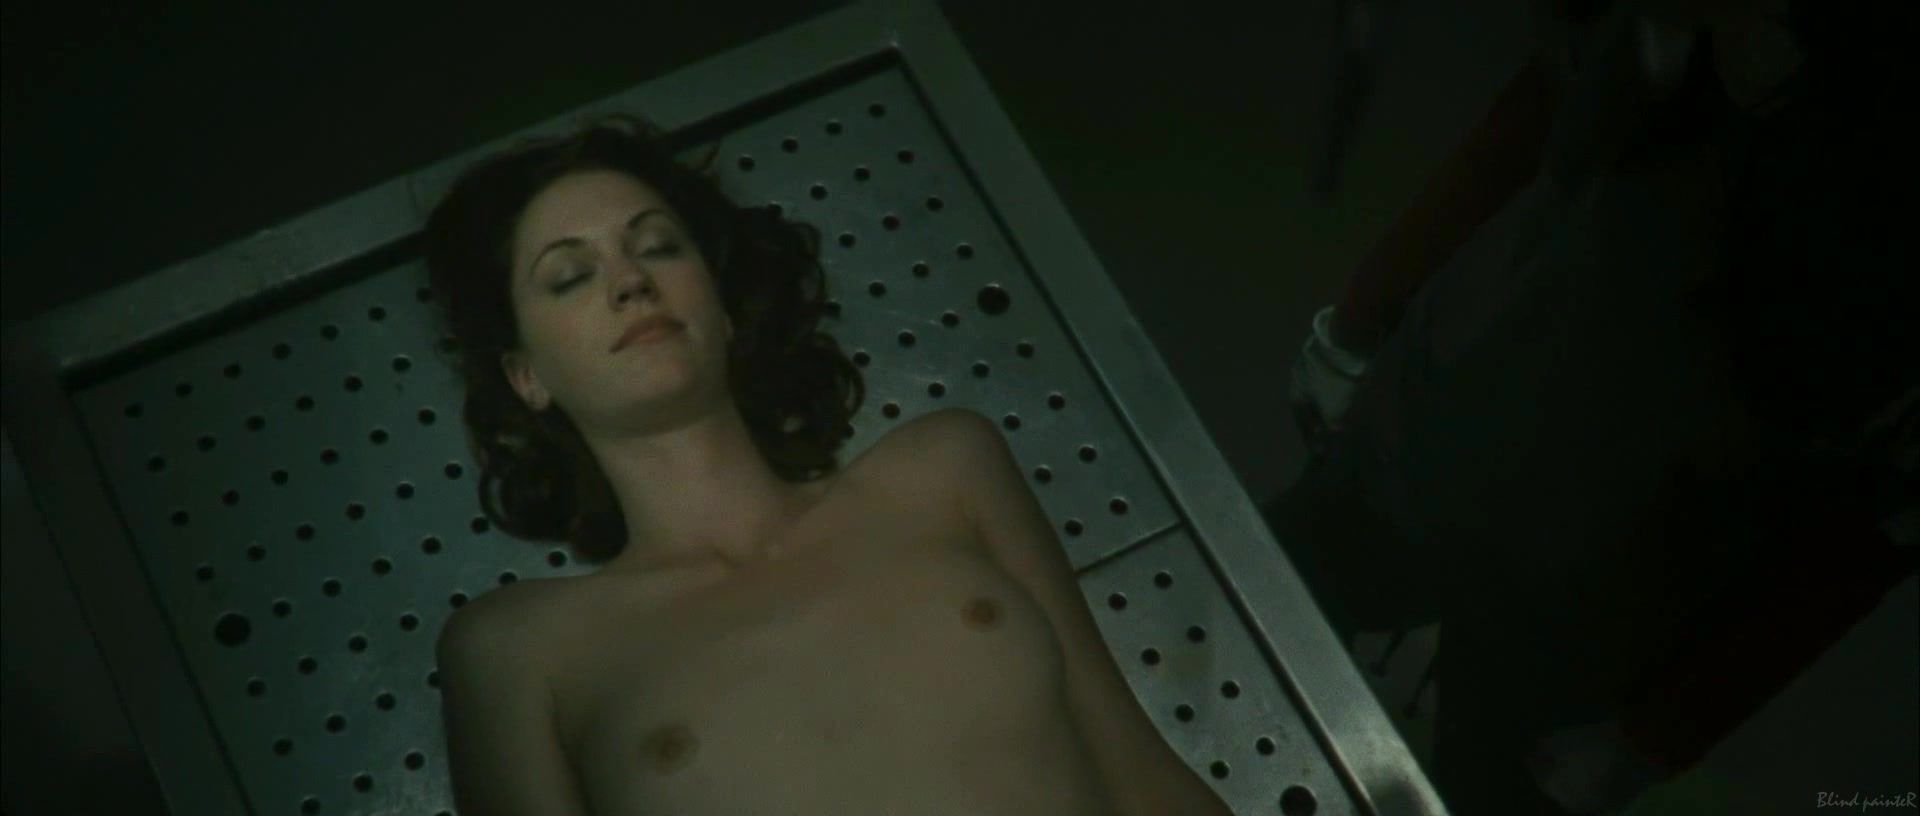 EuroSexParties Sex video Lauren Lee Smith nude - Pathology (2008) Hot Milf